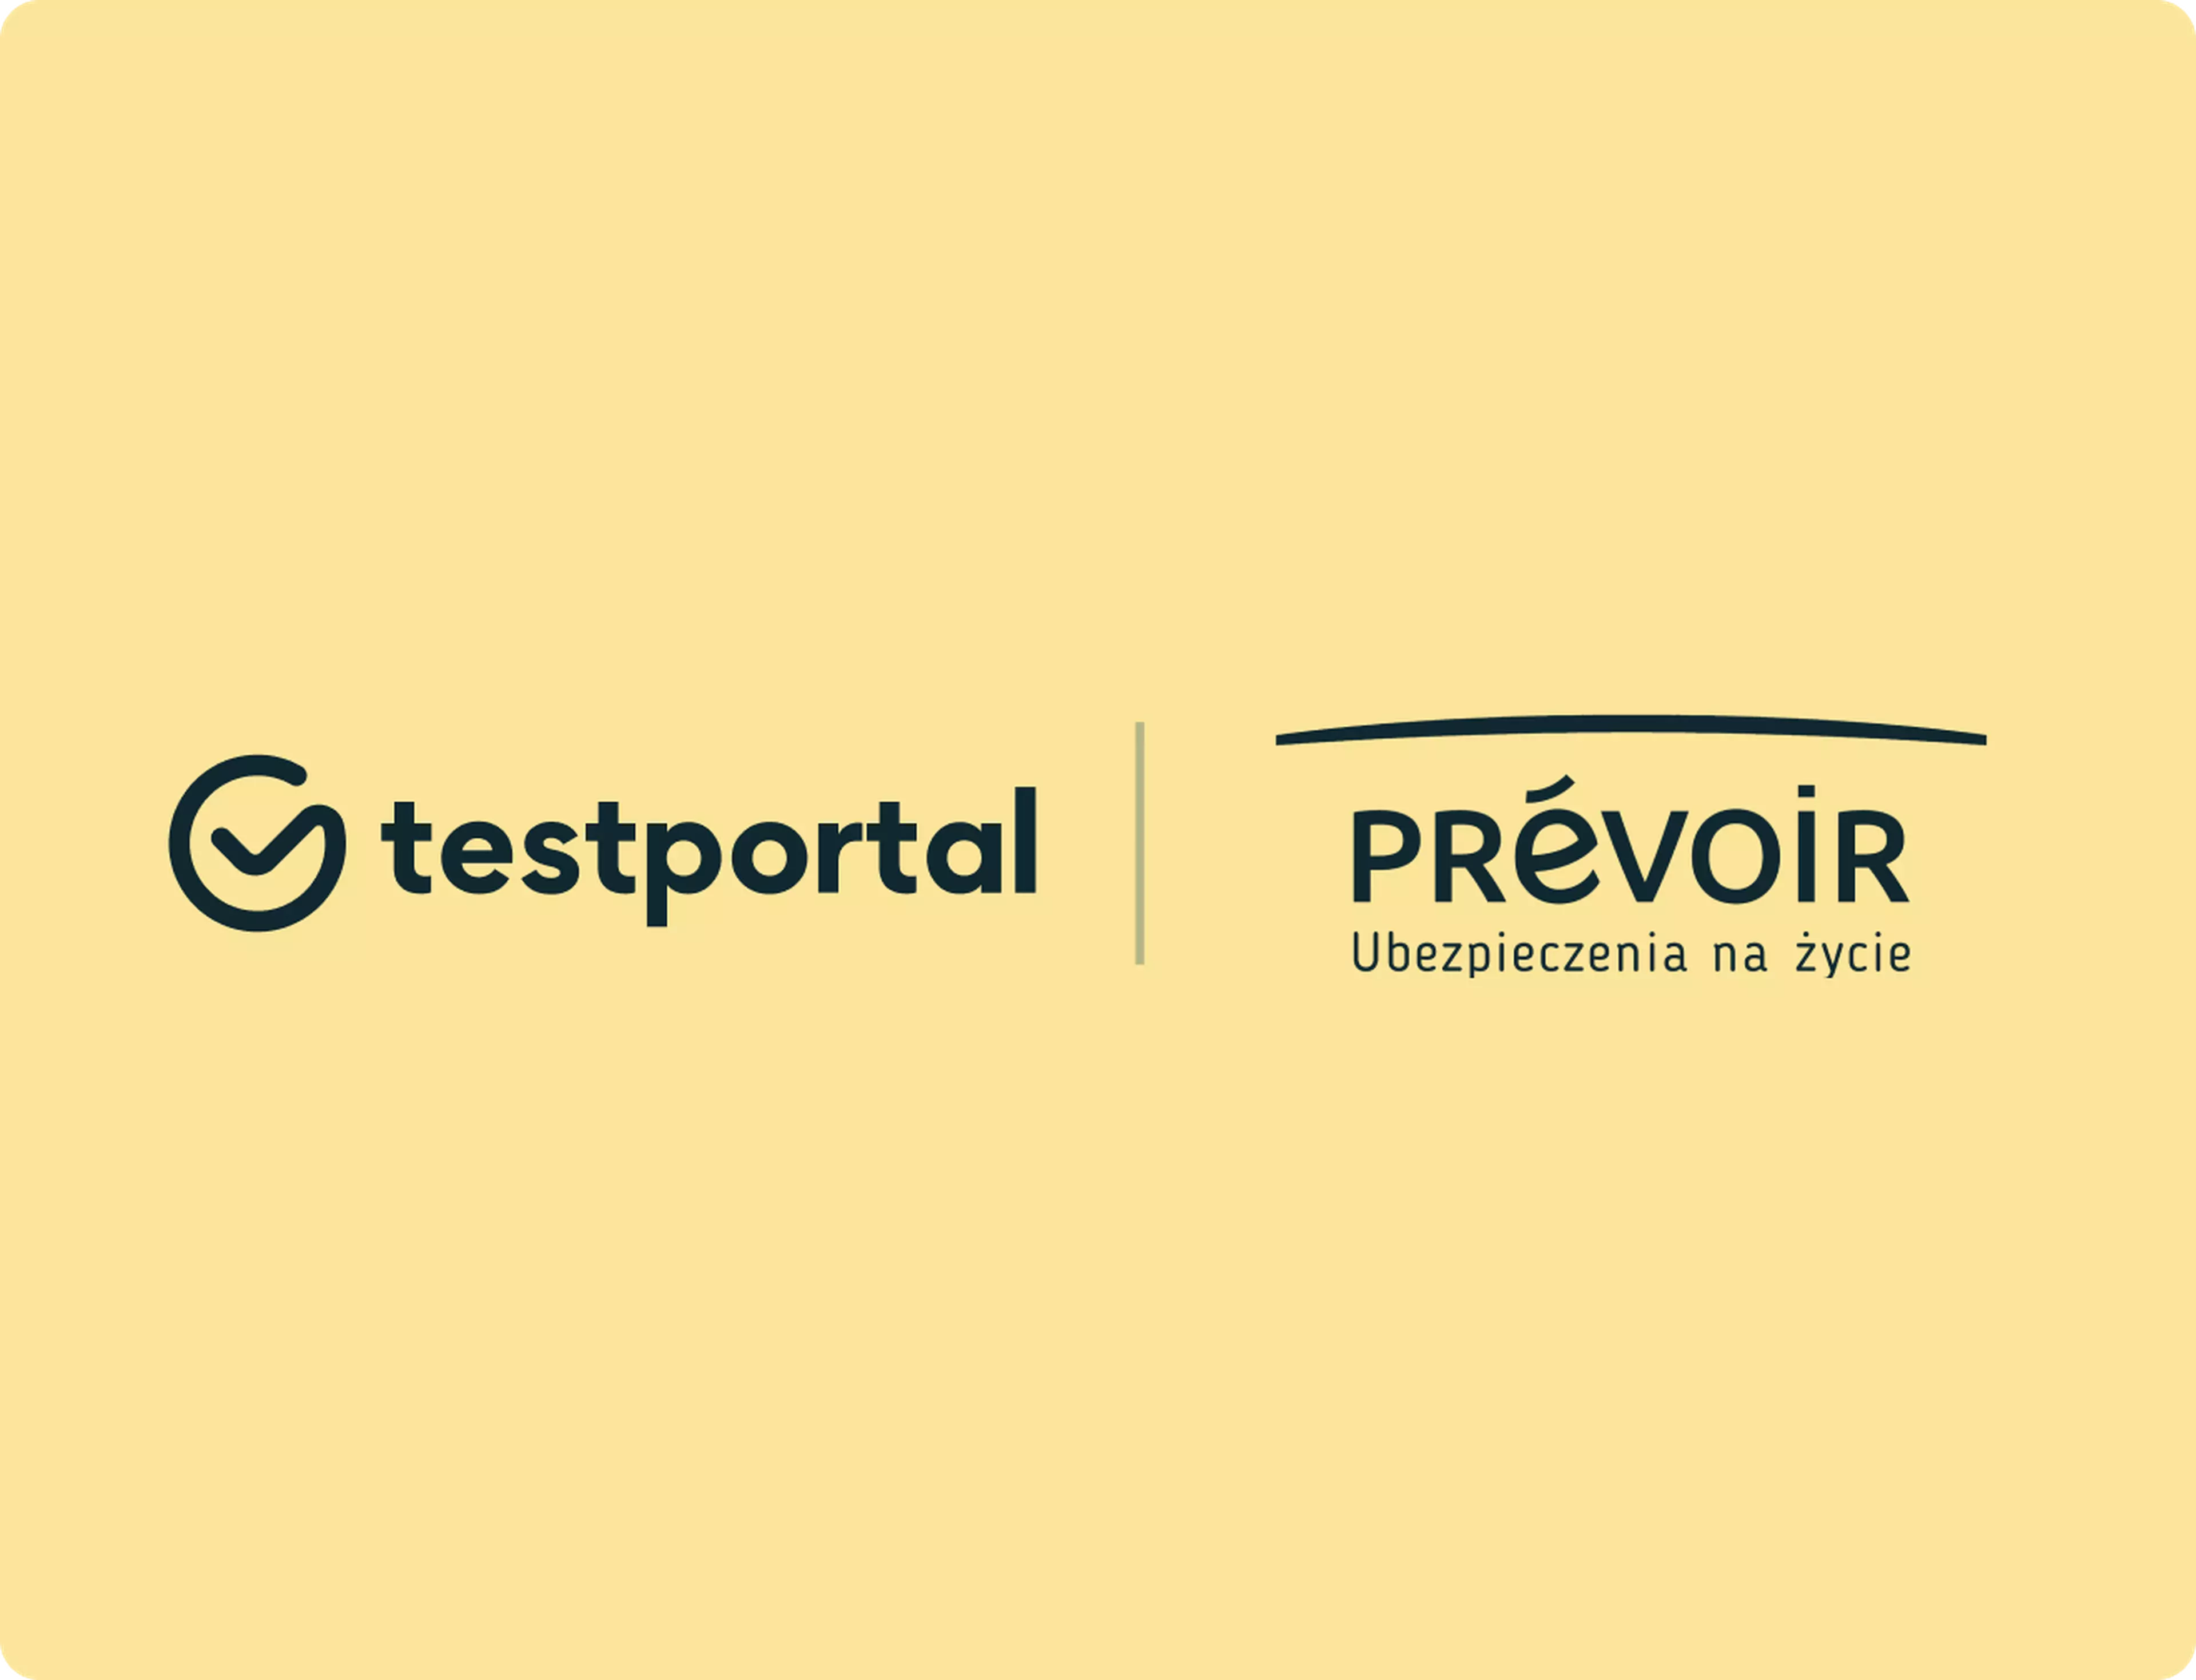 Testportal and Prevoir logos